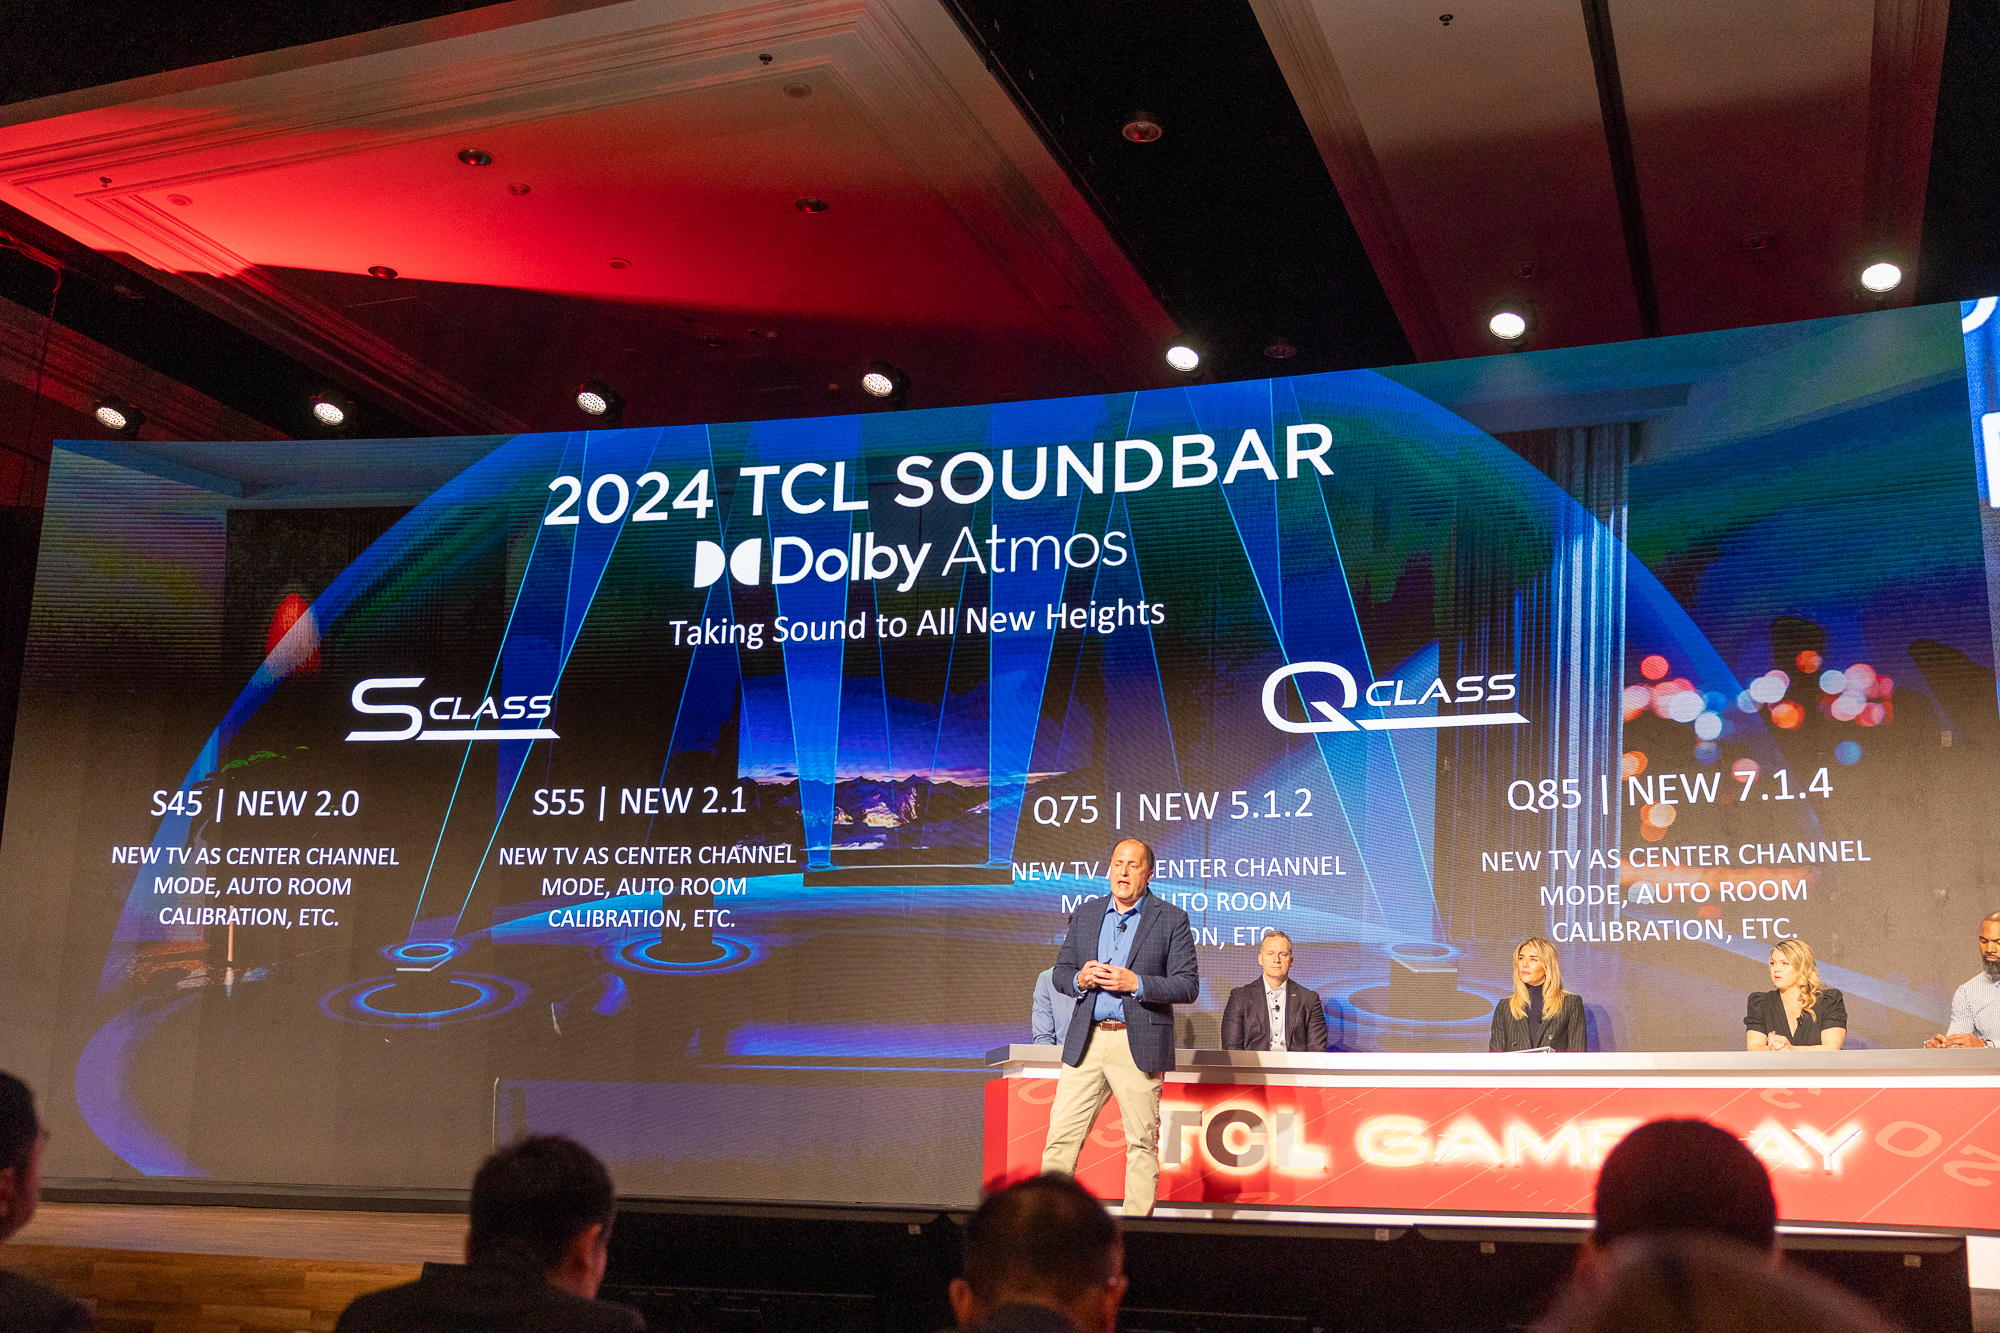 TCL announces its new soundbars at its CES 2024 press conference in Las Vegas.